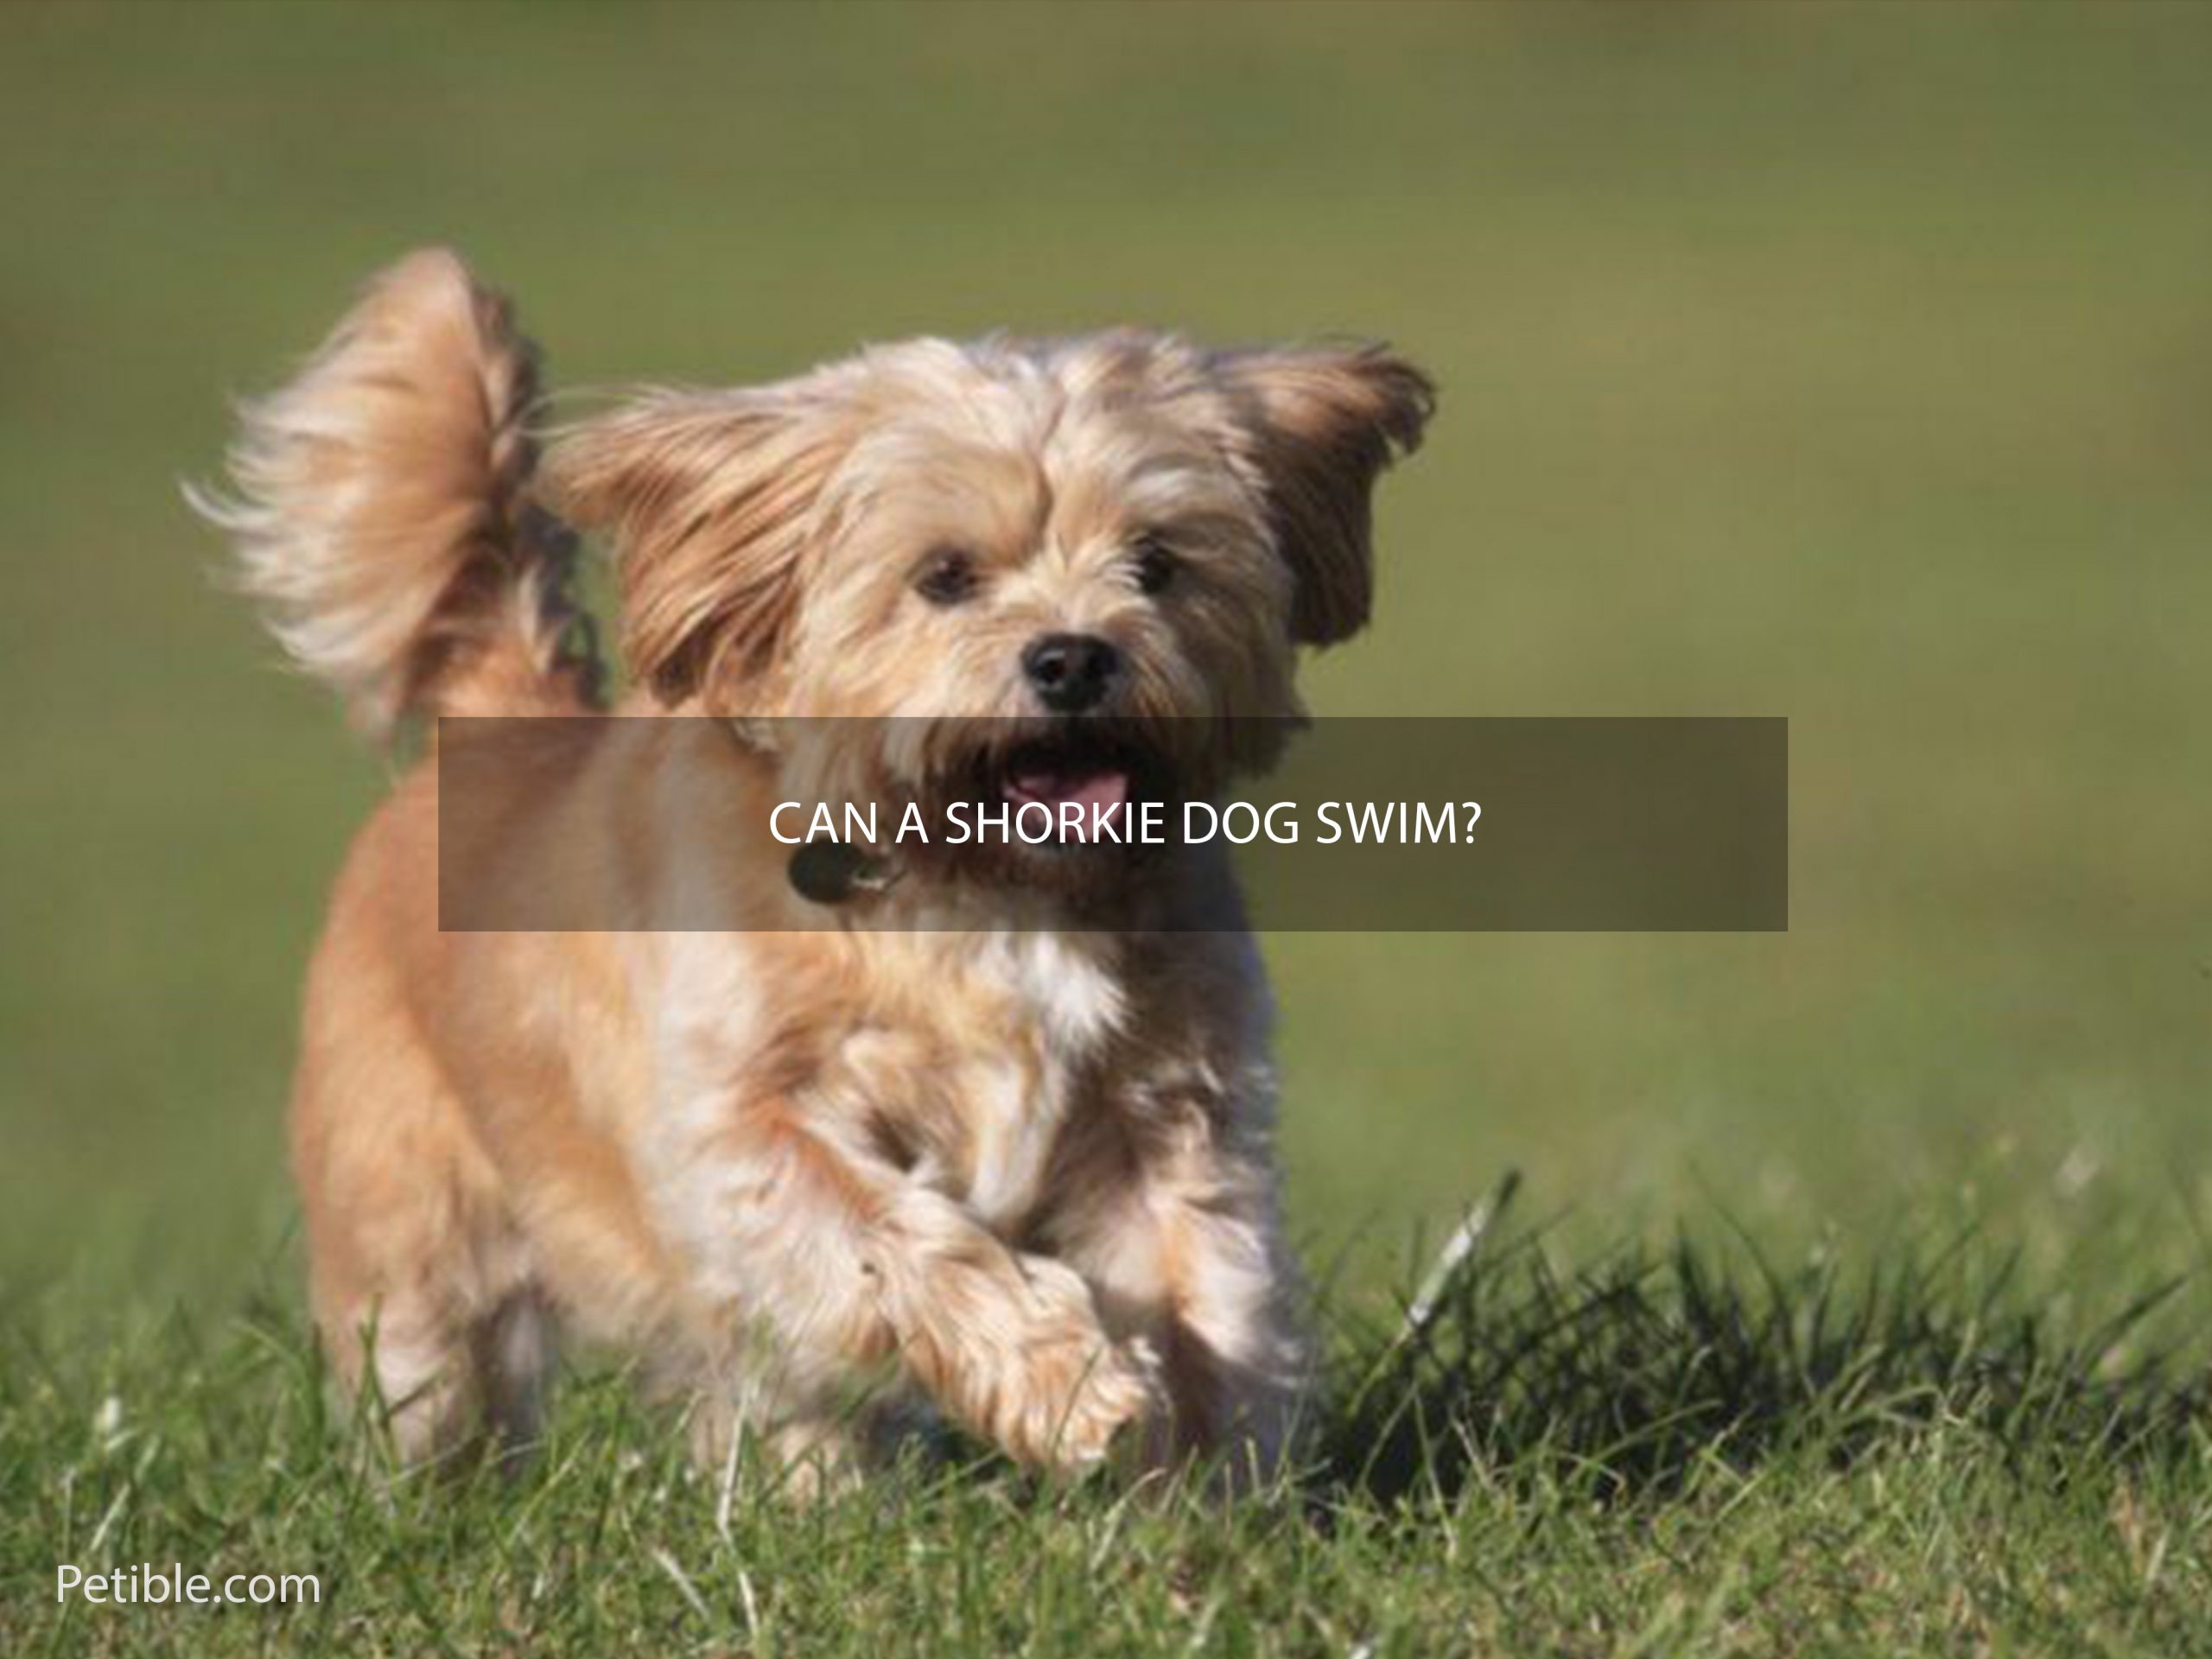 Can a Shorkie dog swim